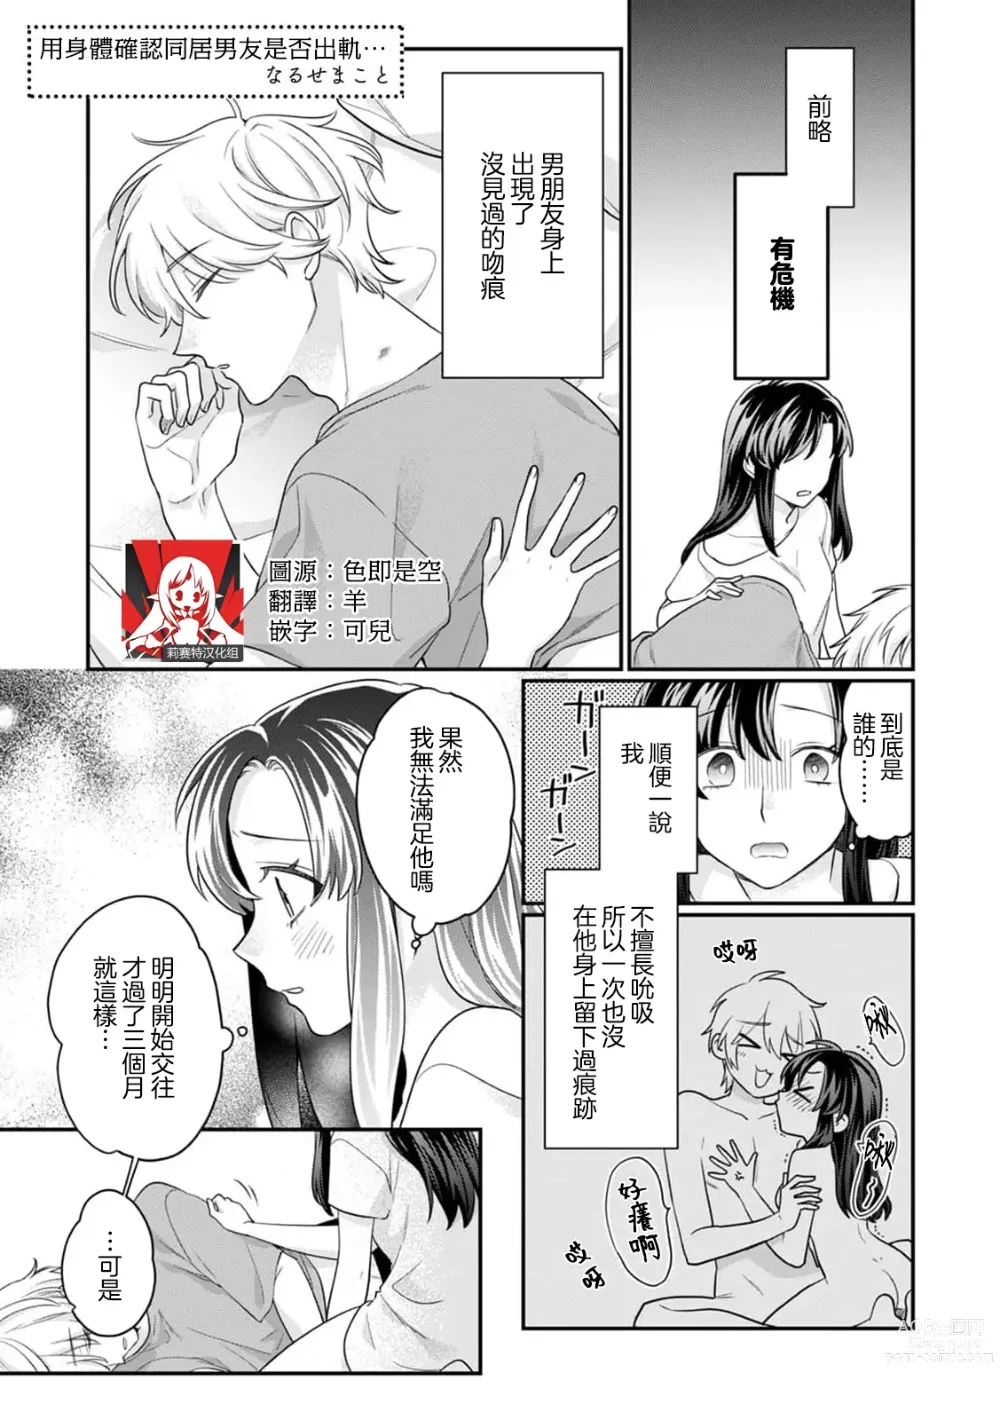 Page 1 of manga 用身体确认同居男友是否出轨…